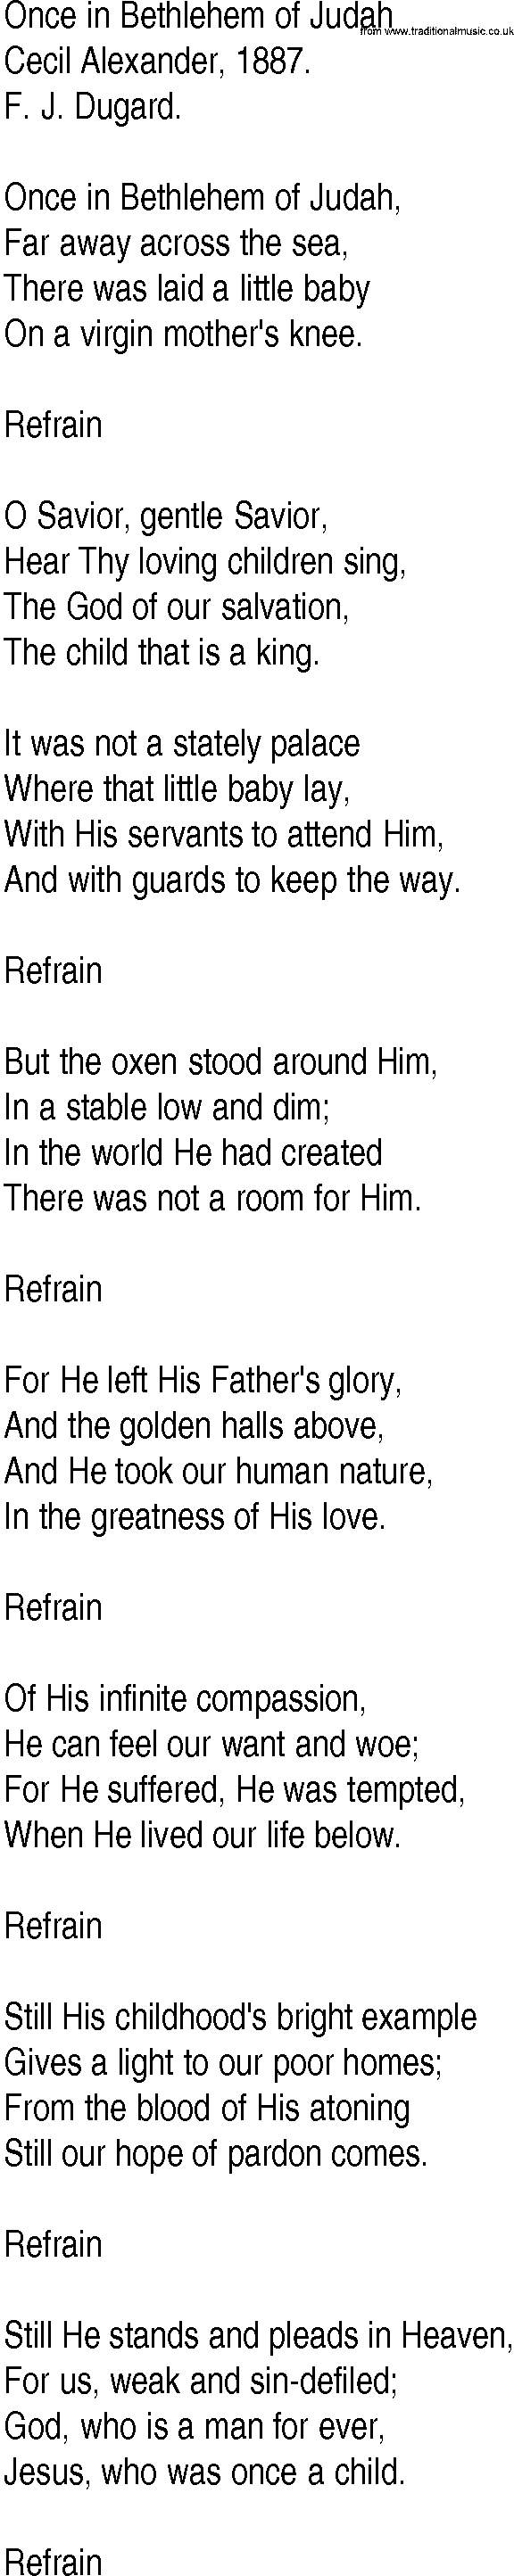 Hymn and Gospel Song: Once in Bethlehem of Judah by Cecil Alexander lyrics